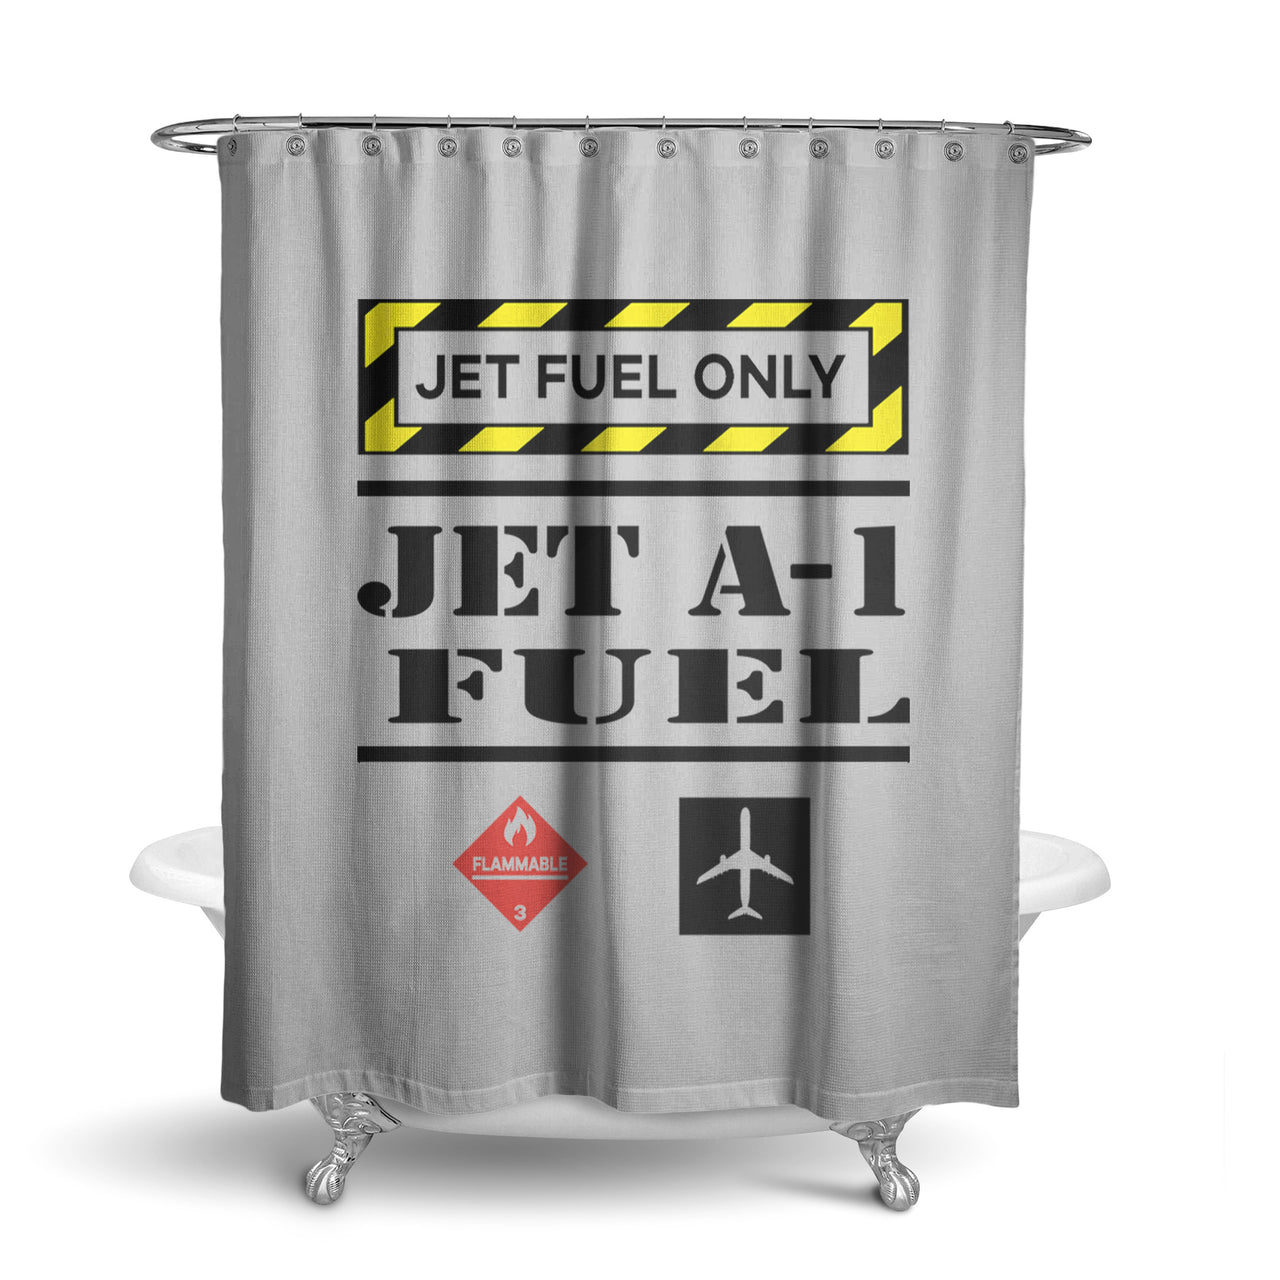 Jet Fuel Only Designed Shower Curtains